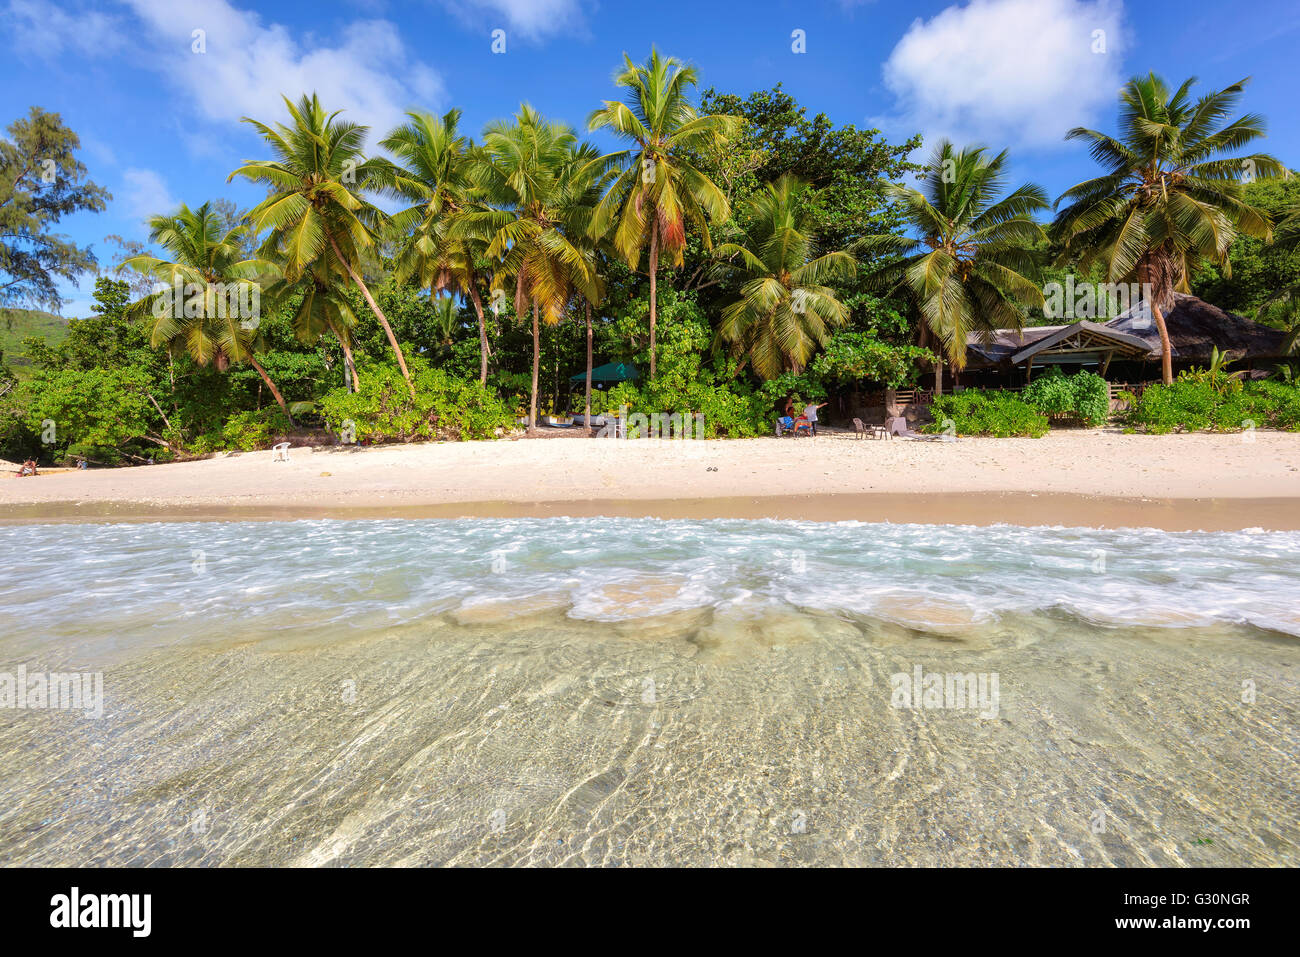 Palm trees on the beach at Praslin island, Seychelles Stock Photo